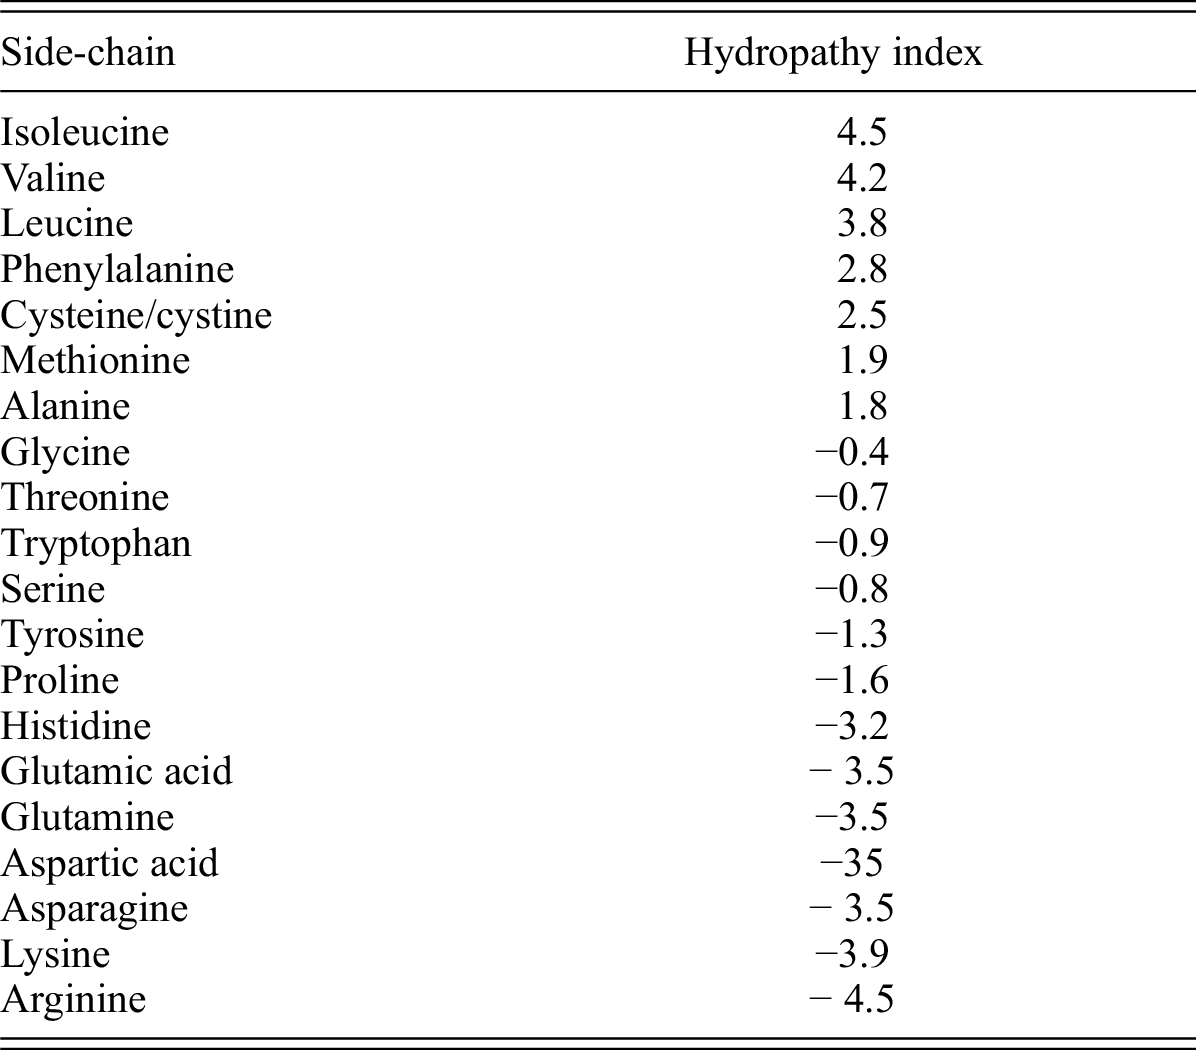 8 hydrophobic amino acids